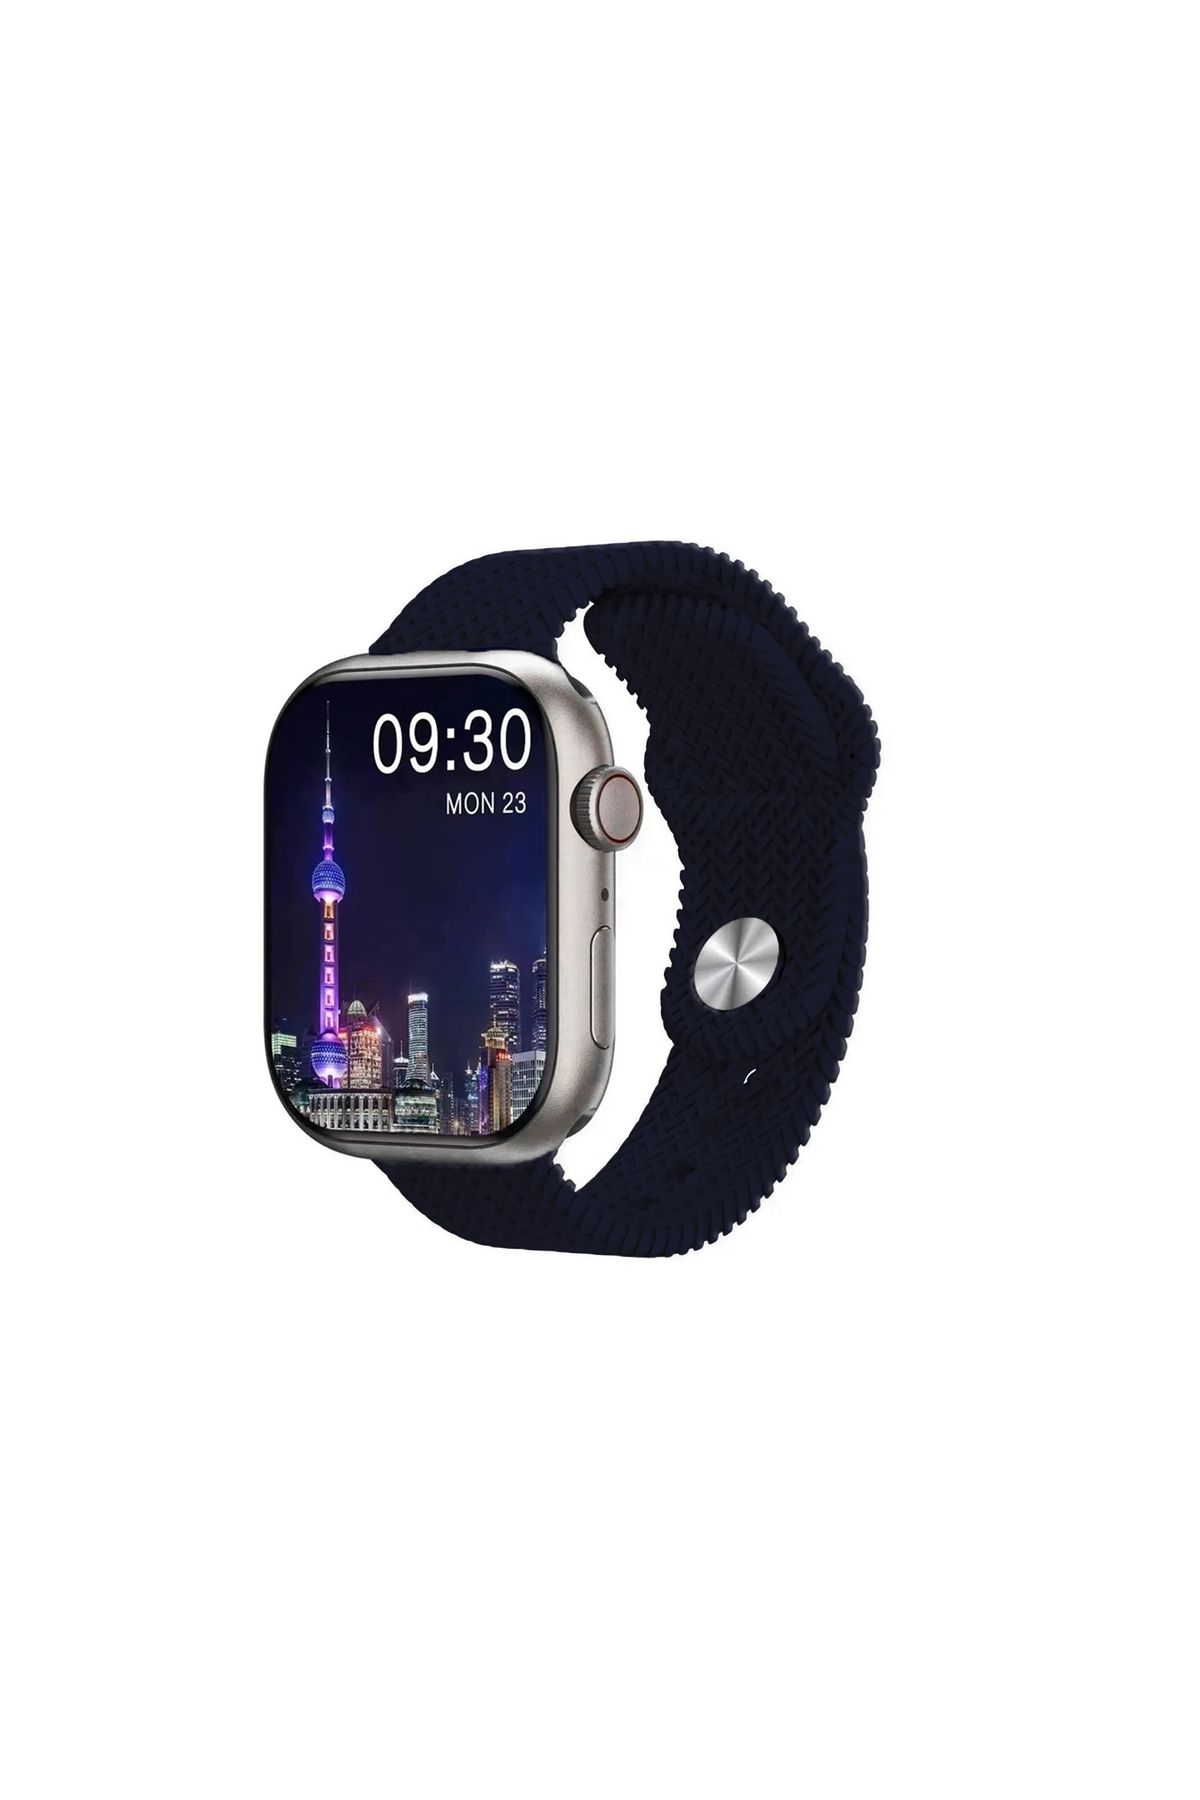 Global 2023 Watch 9 Pro Amoled Ekran Android İos Uyumlu Akıllı Saat Lacivert WNE0929